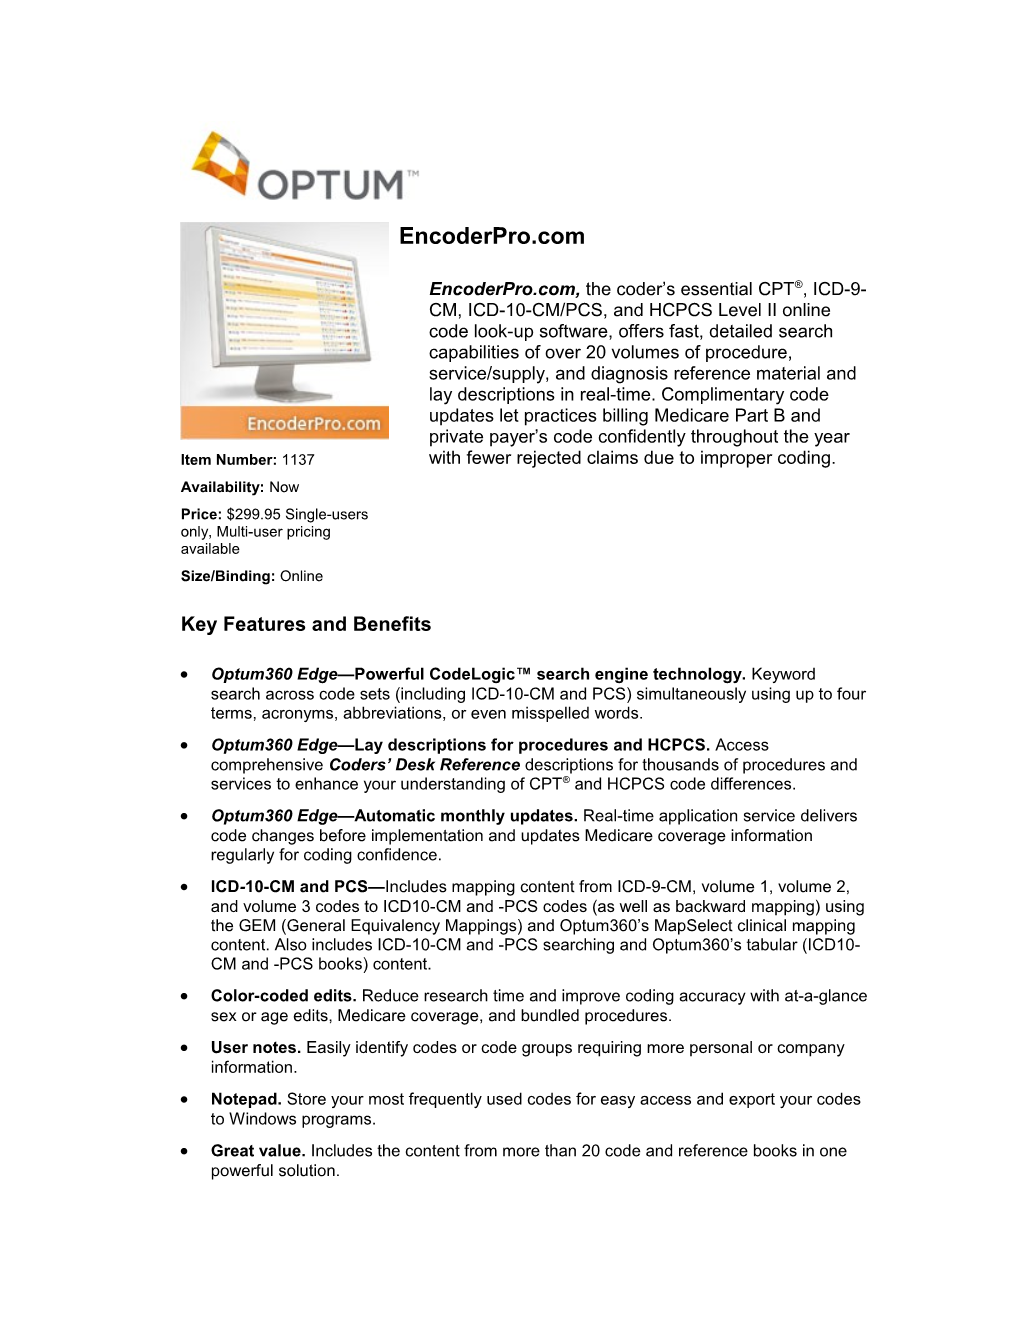 Optum360 Edge Powerful Codelogic Search Engine Technology. Keyword Search Across Code